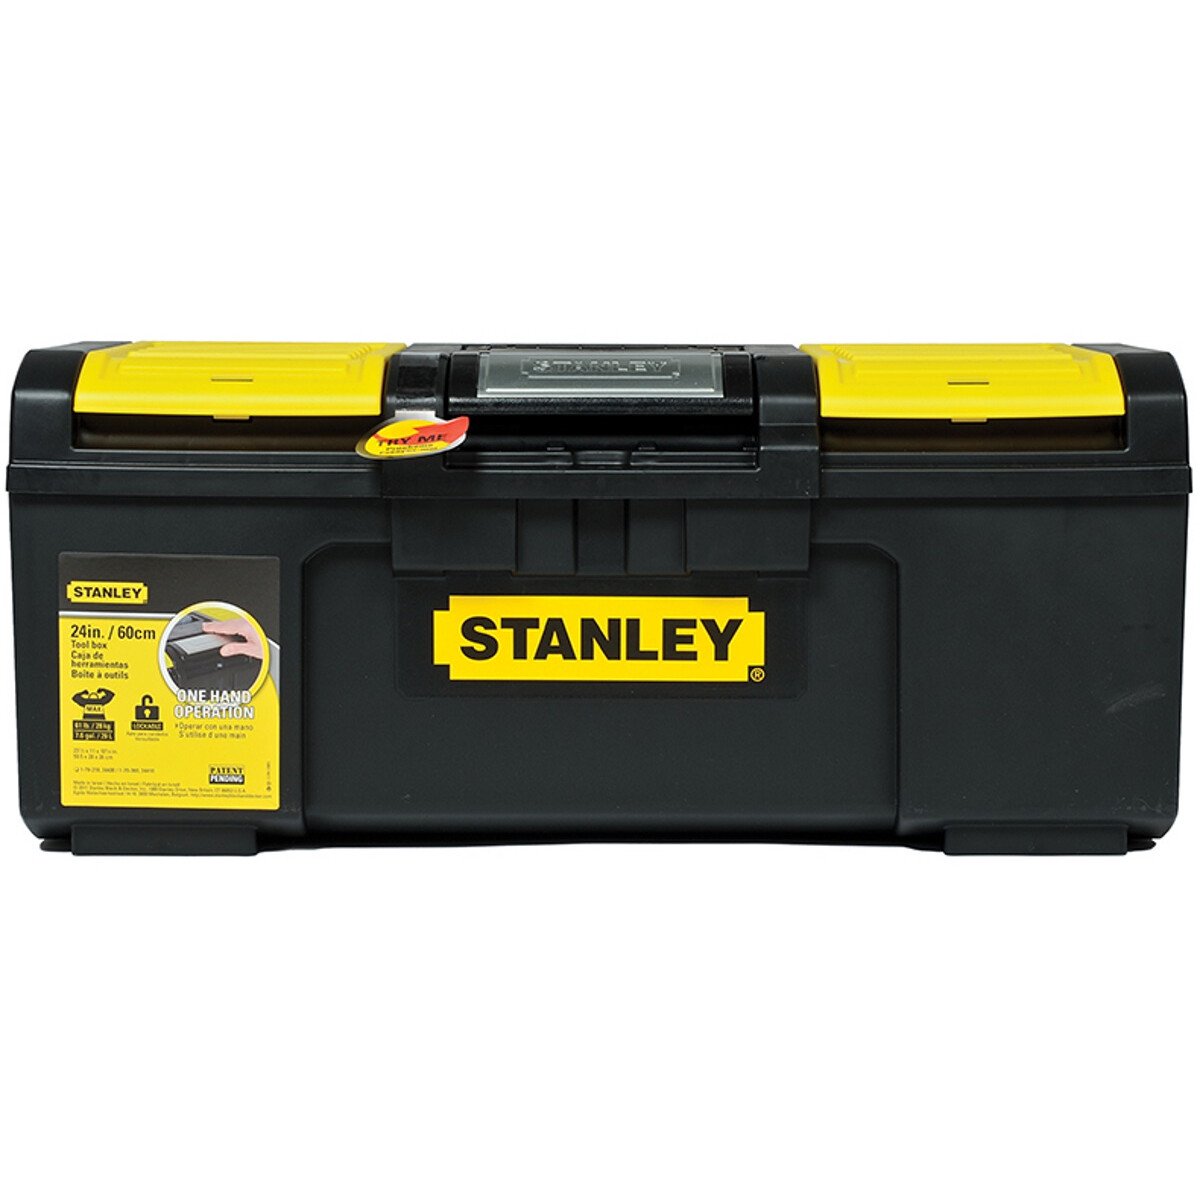 Toolbox 1. Ящик для инструмента Stanley Basic Toolbox 1-79-218. Ящик для инструмента Stanley Basic Toolbox 24. Ящик для инструментов Stanley Toolbox 1 79 2162. Ящик для инструментов Stanley FATMAX 1-93-935 710х320х295 мм.